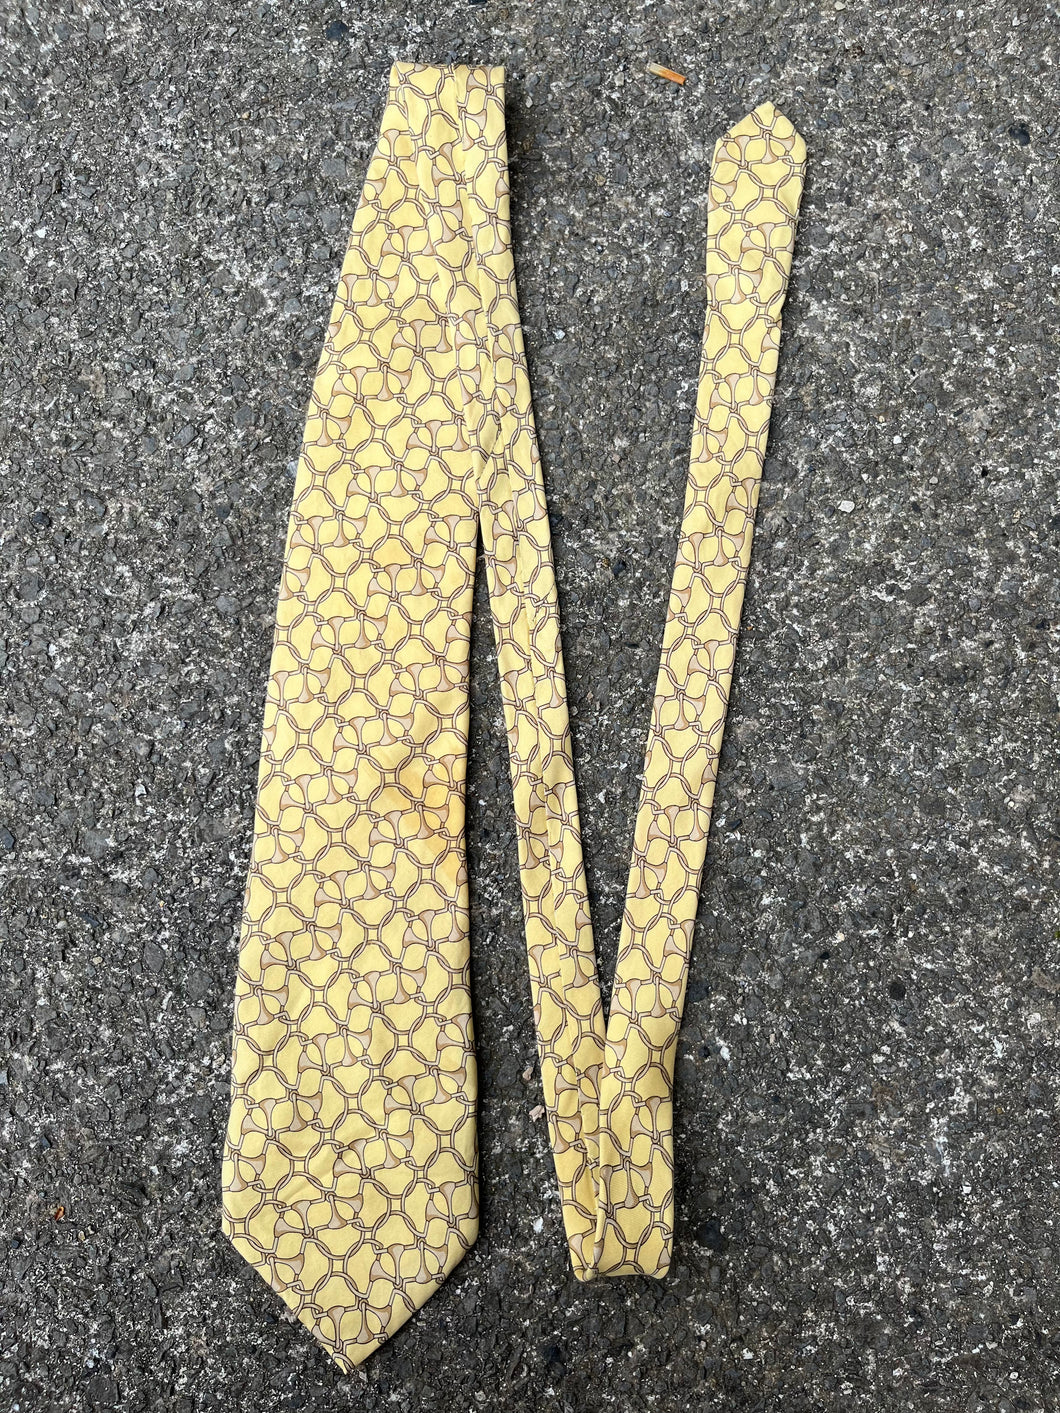 Good Going yellow tie